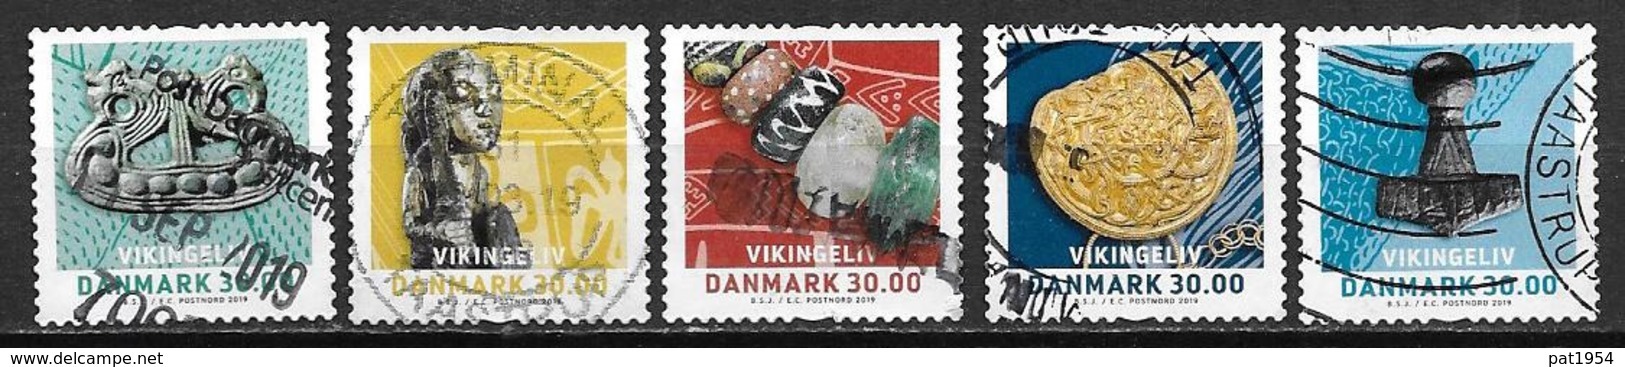 Danemark 2019 Série Oblitérée Vikings - Gebraucht